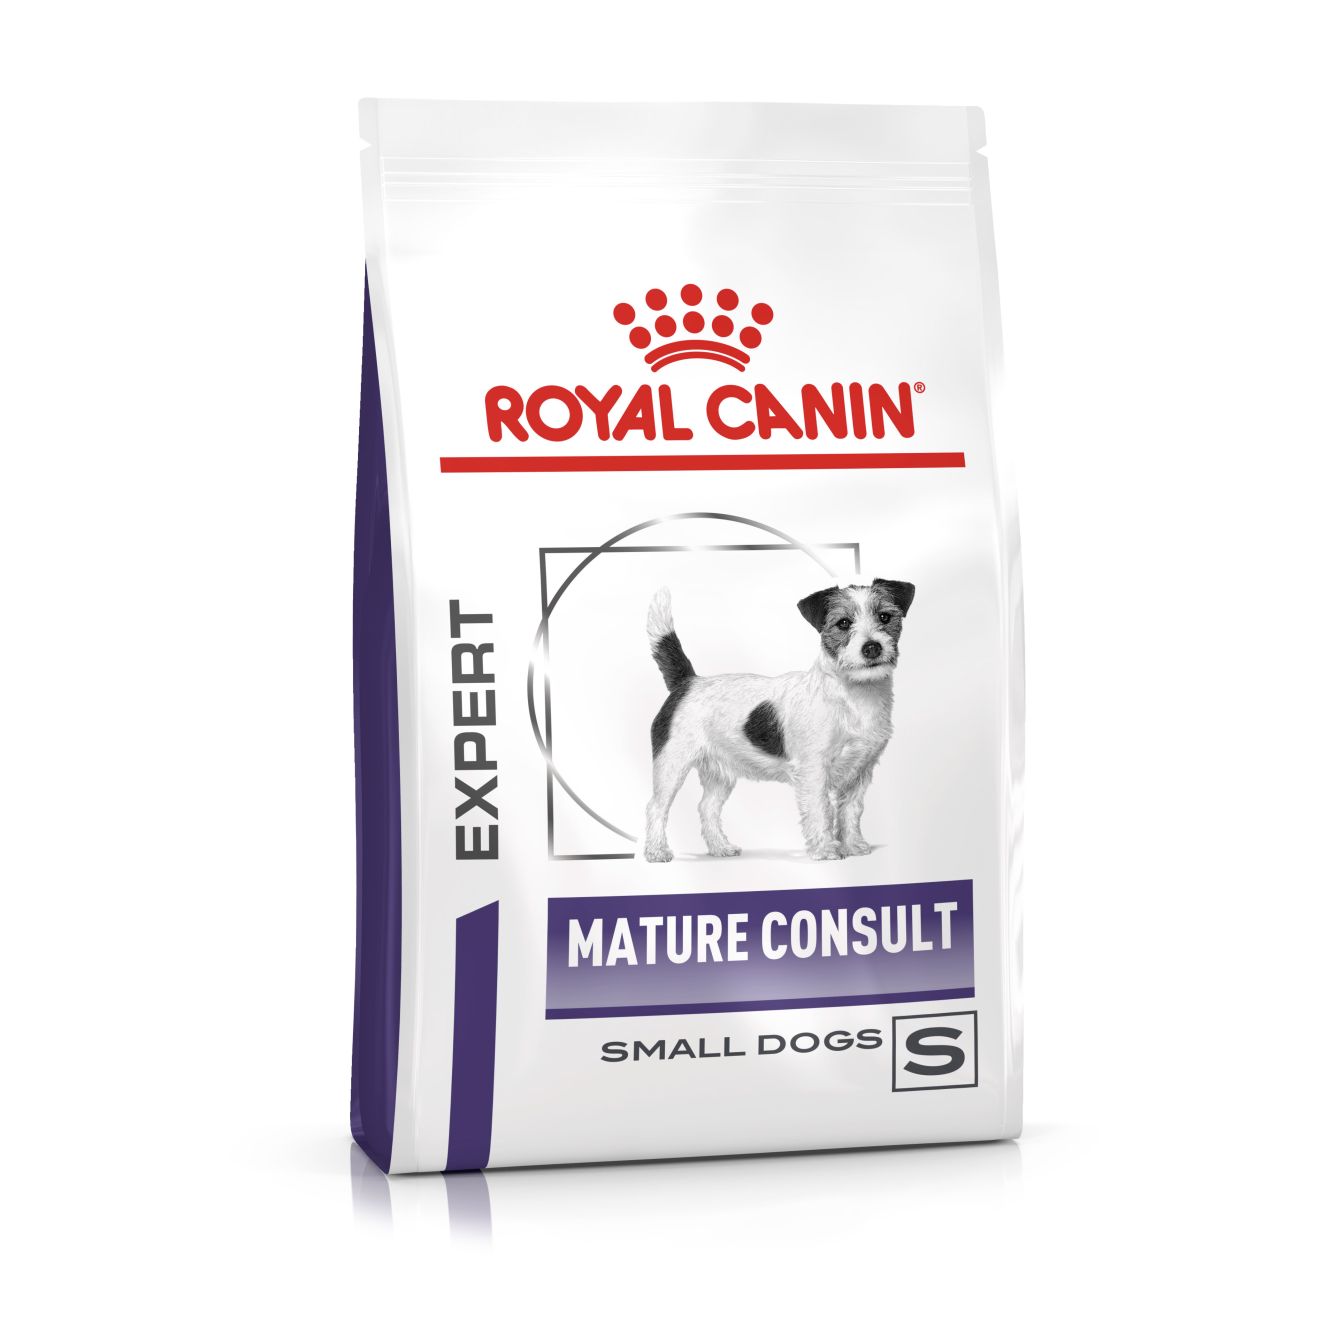 ROYAL CANIN Expert MATURE CONSULT SMALL DOGS Trockenfutter für Hunde 3,5 kg